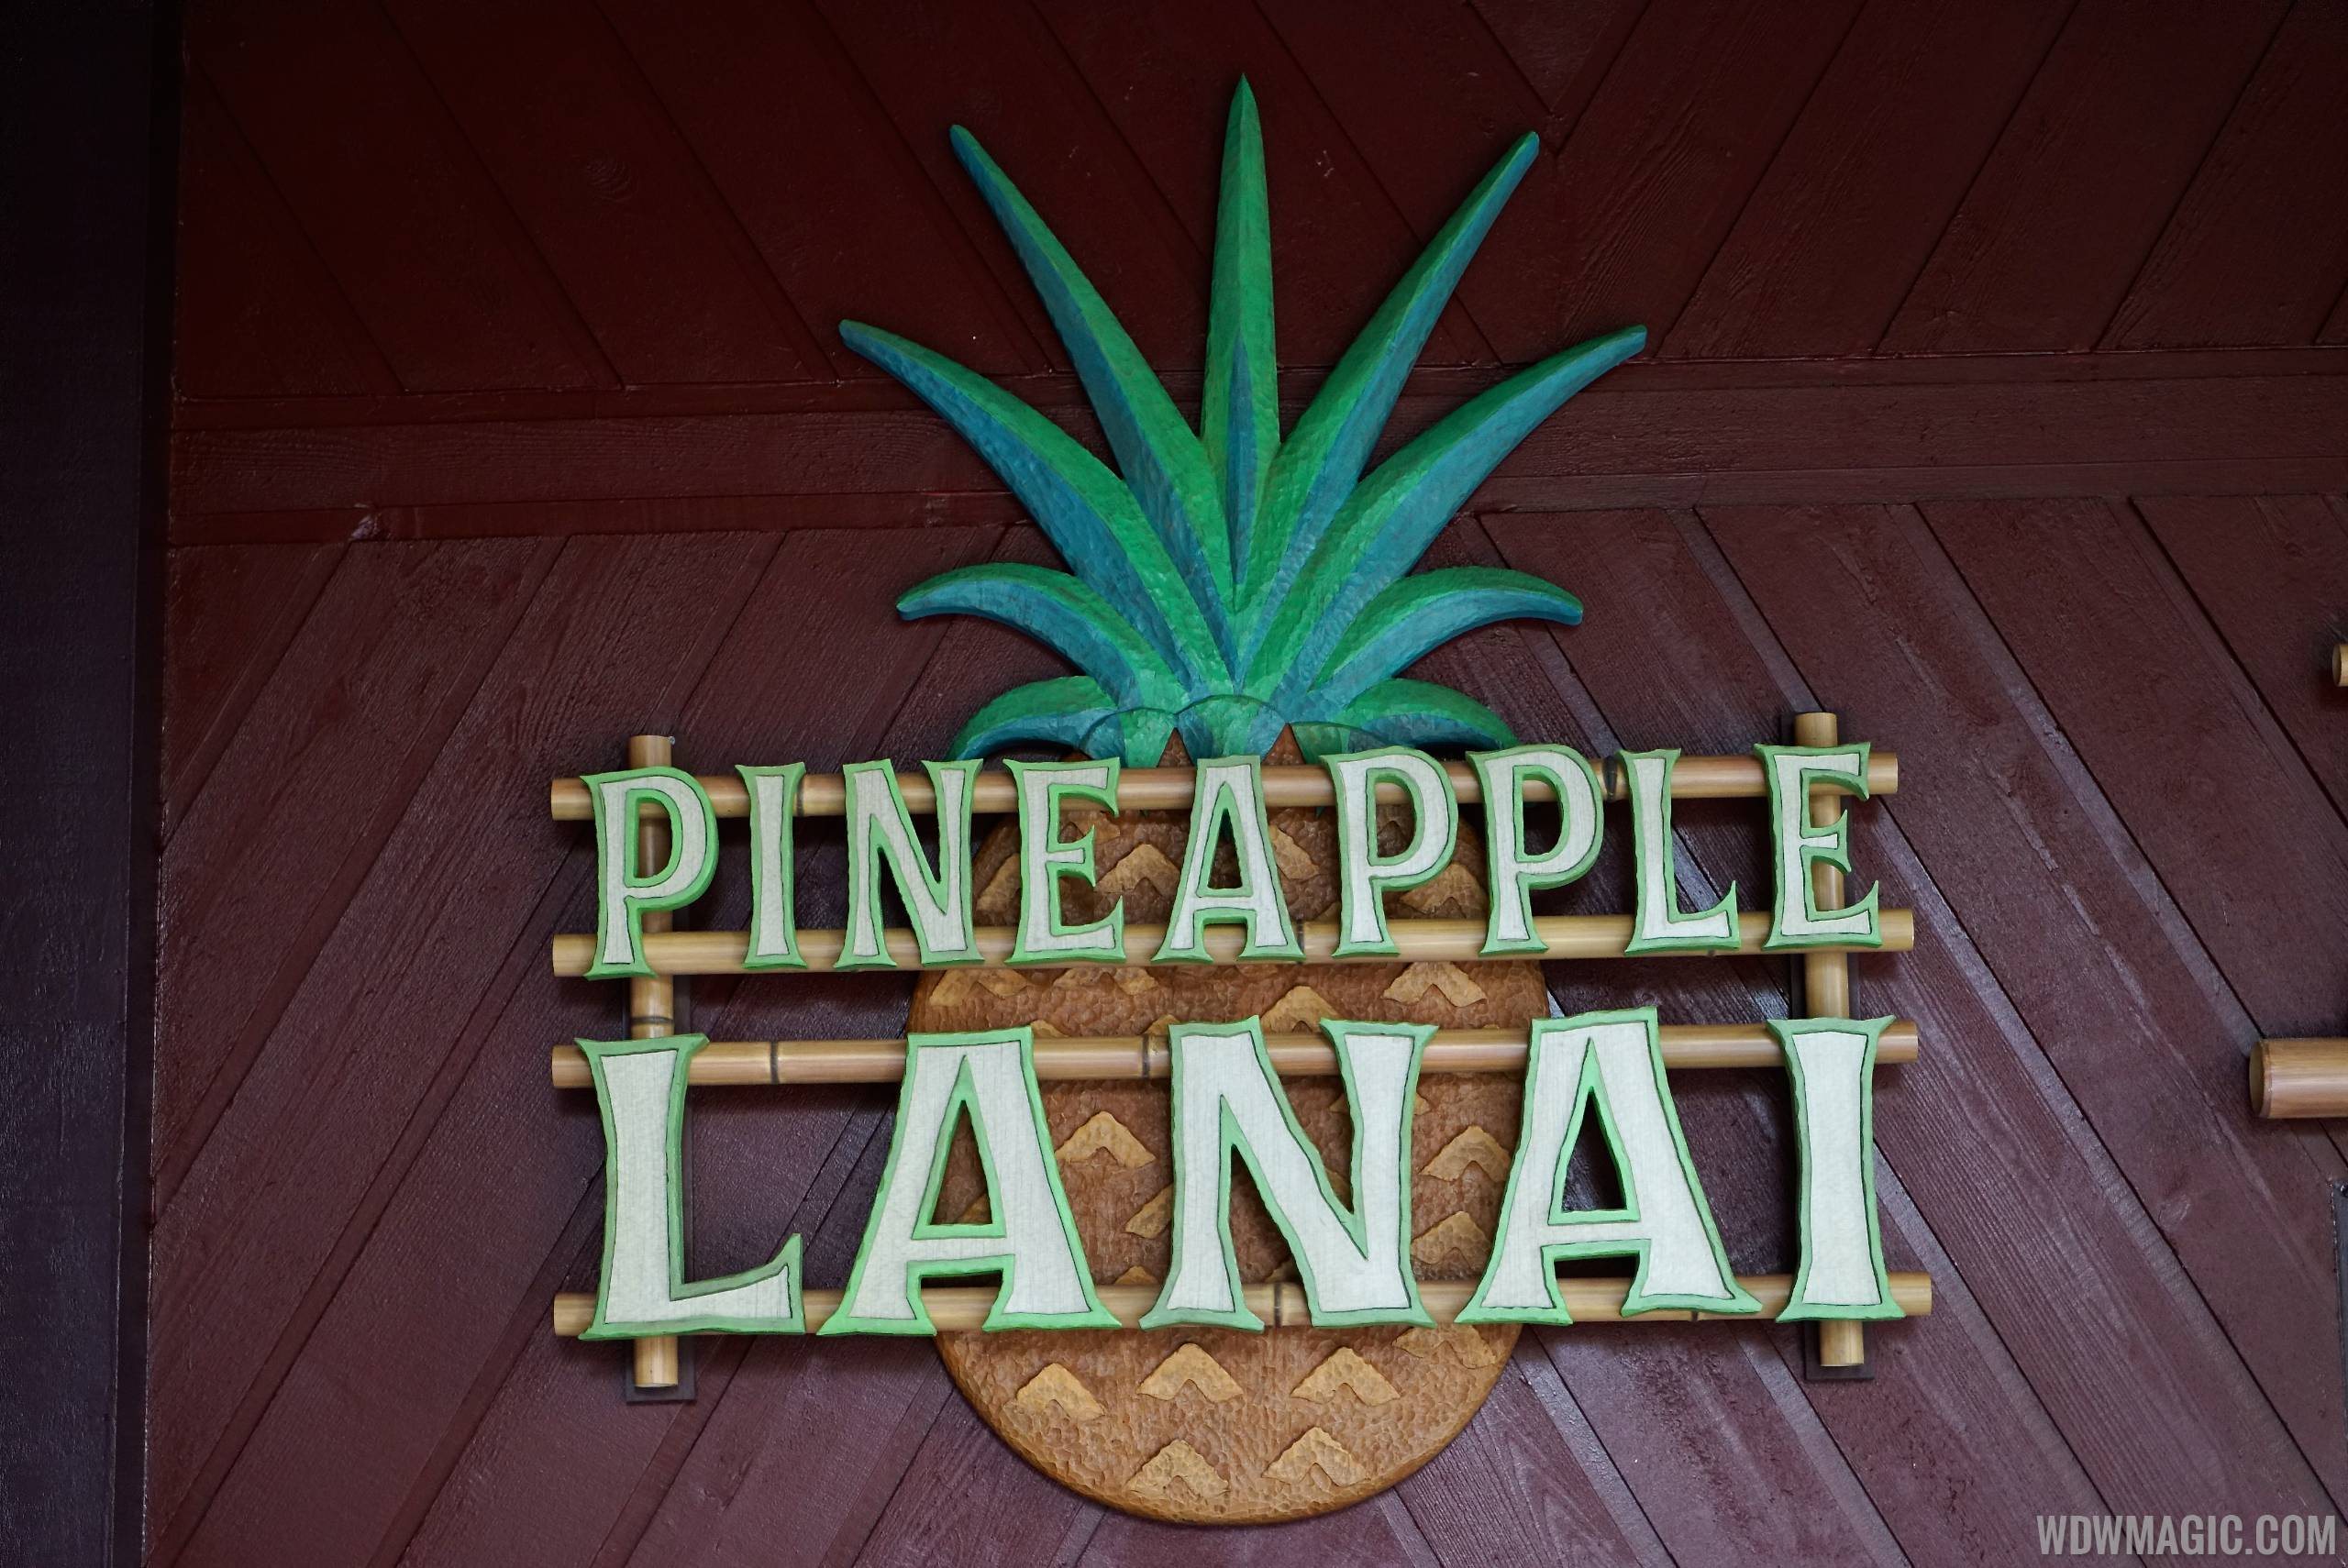 PHOTOS - A look at the new Pineapple Lanai Dole Whip kiosk at Disney's Polynesian Village Resort